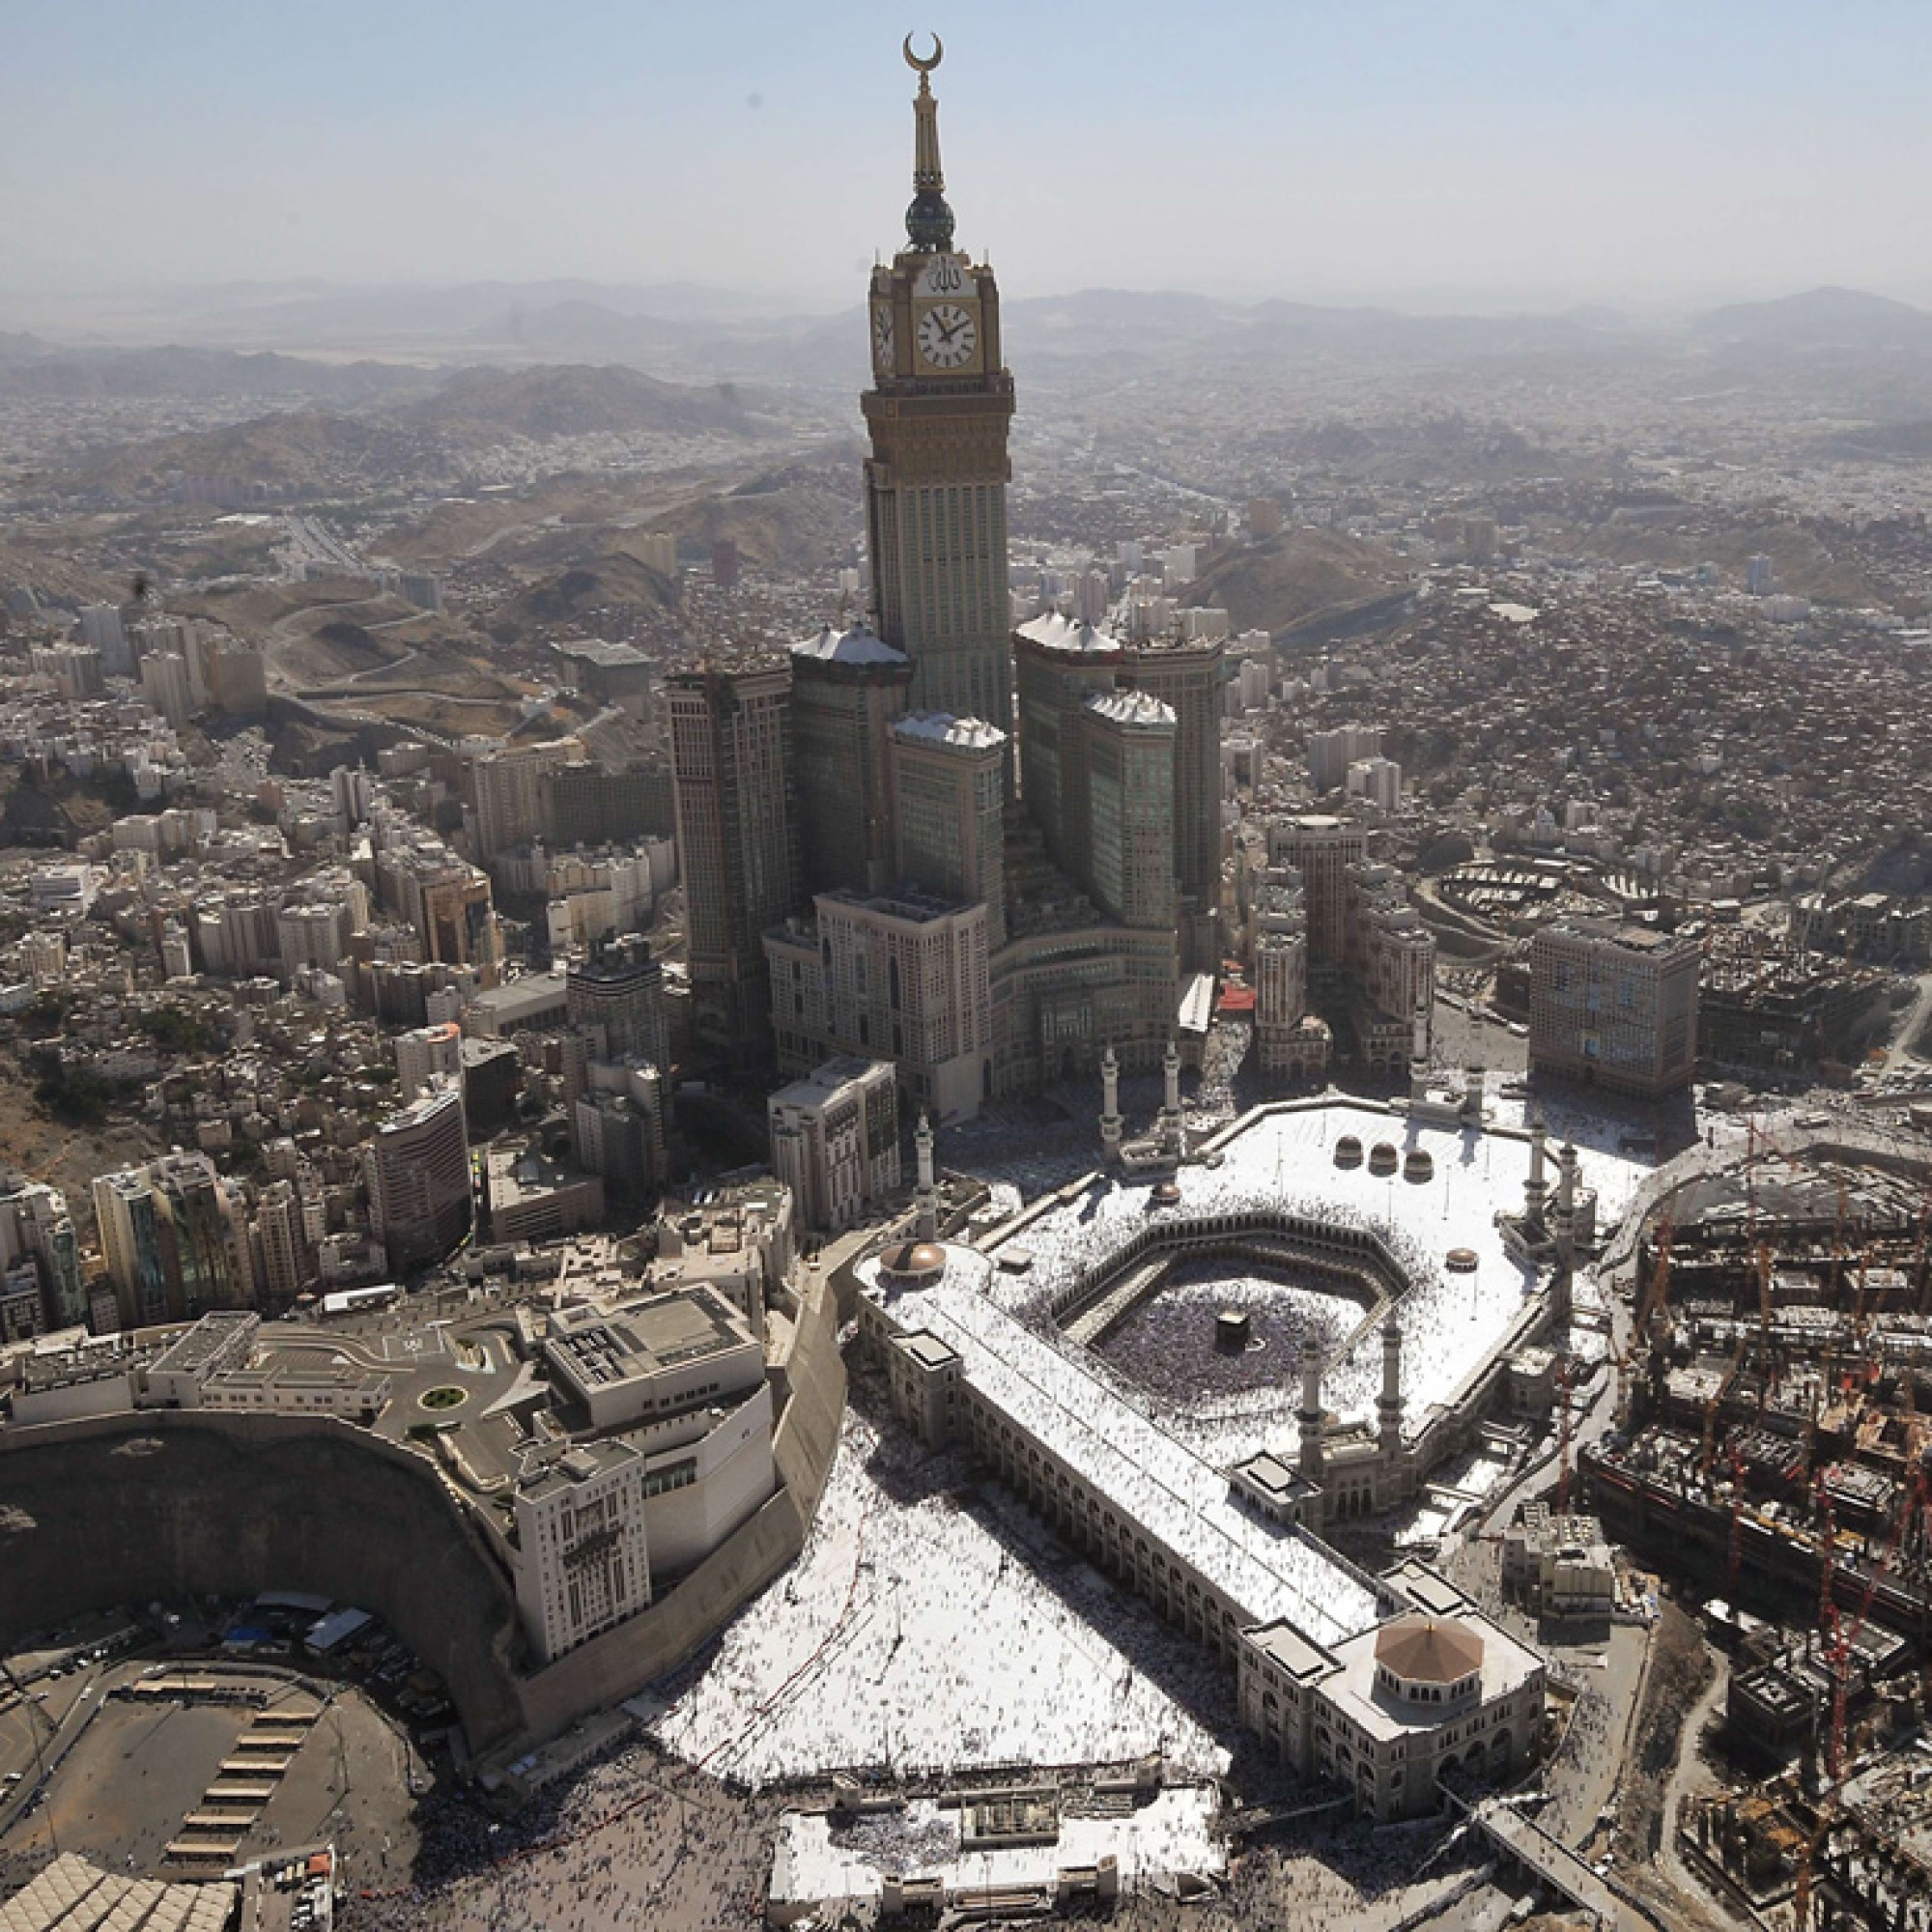  601 Meter Mecca Royal Clock Tower Hotel beherbergt 30000 nach Mekka Pilgernde. 